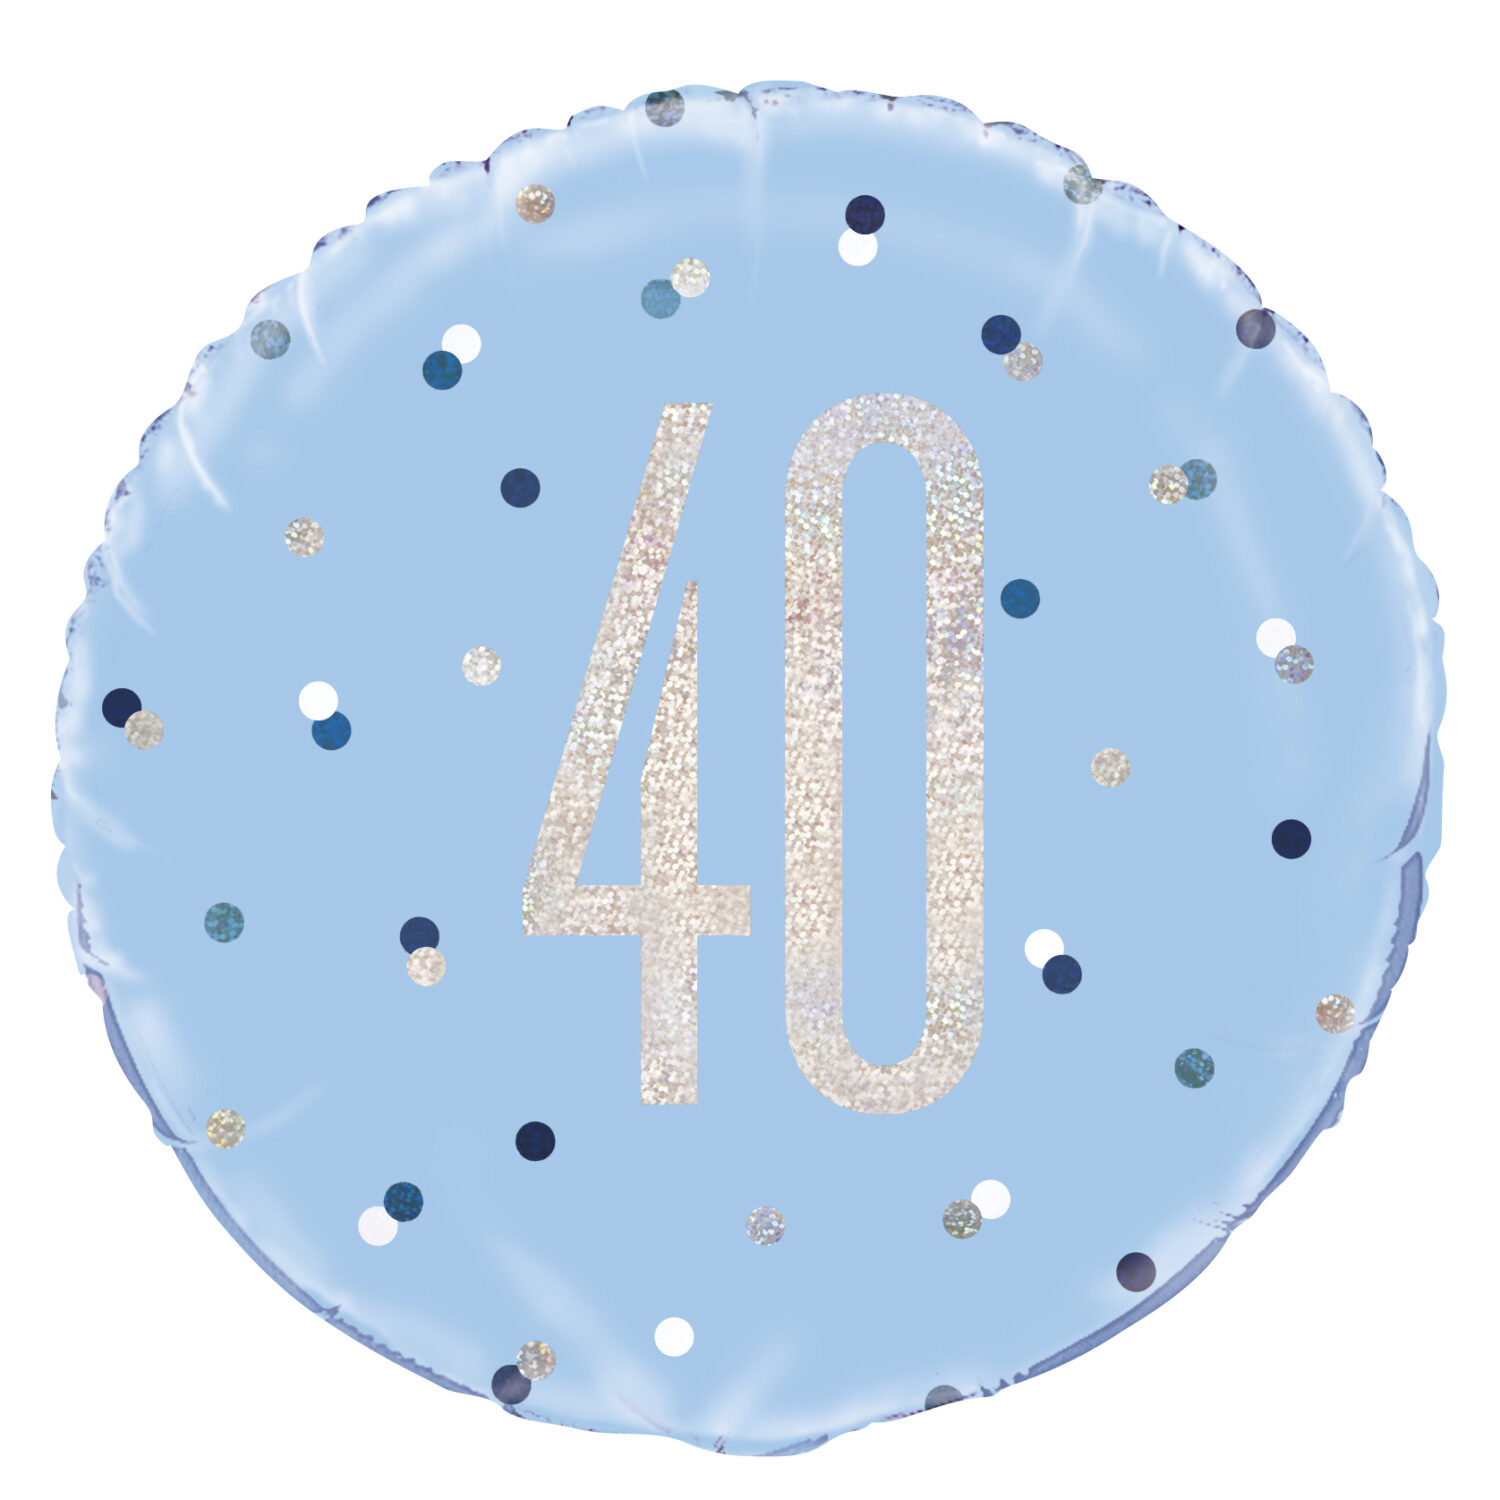 40th birthday balloon